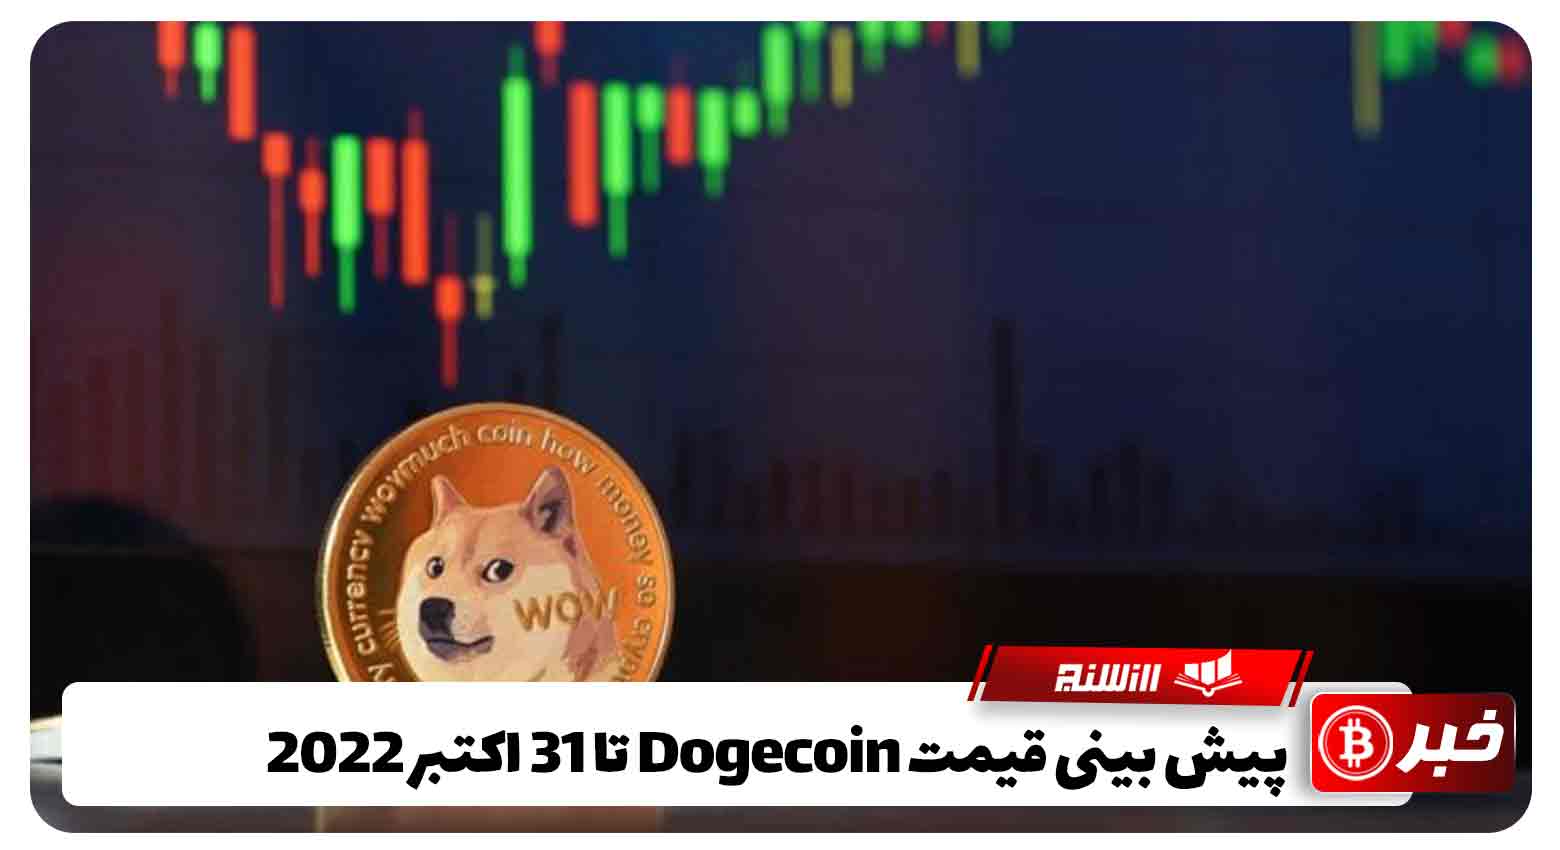 پیش بینی قیمت Dogecoin تا 31 اکتبر 2022